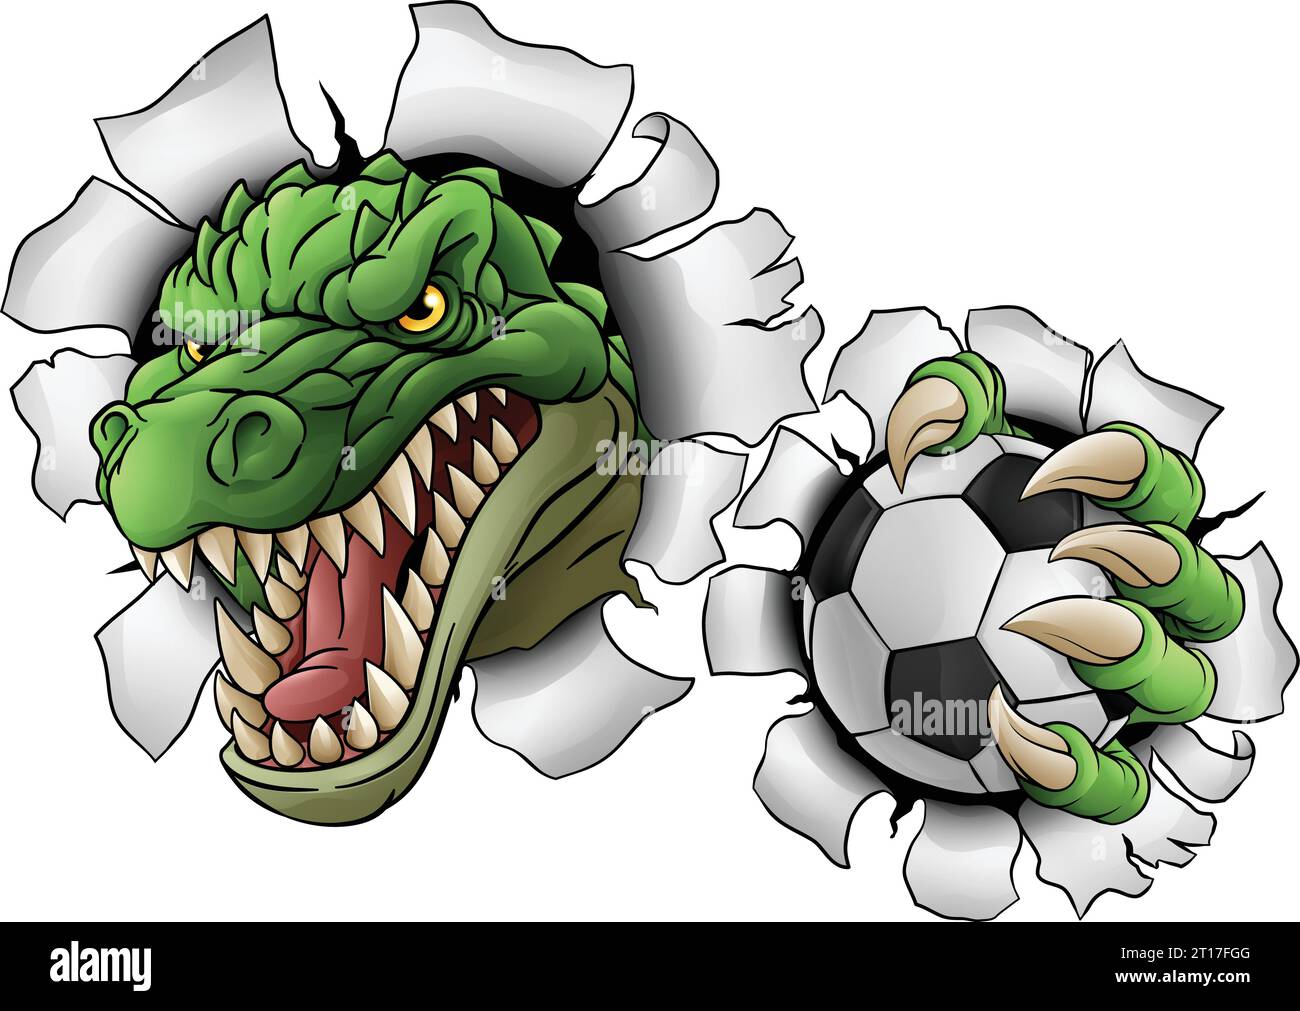 Crocodile Dinosaur Alligator Soccer Mascot Illustration de Vecteur